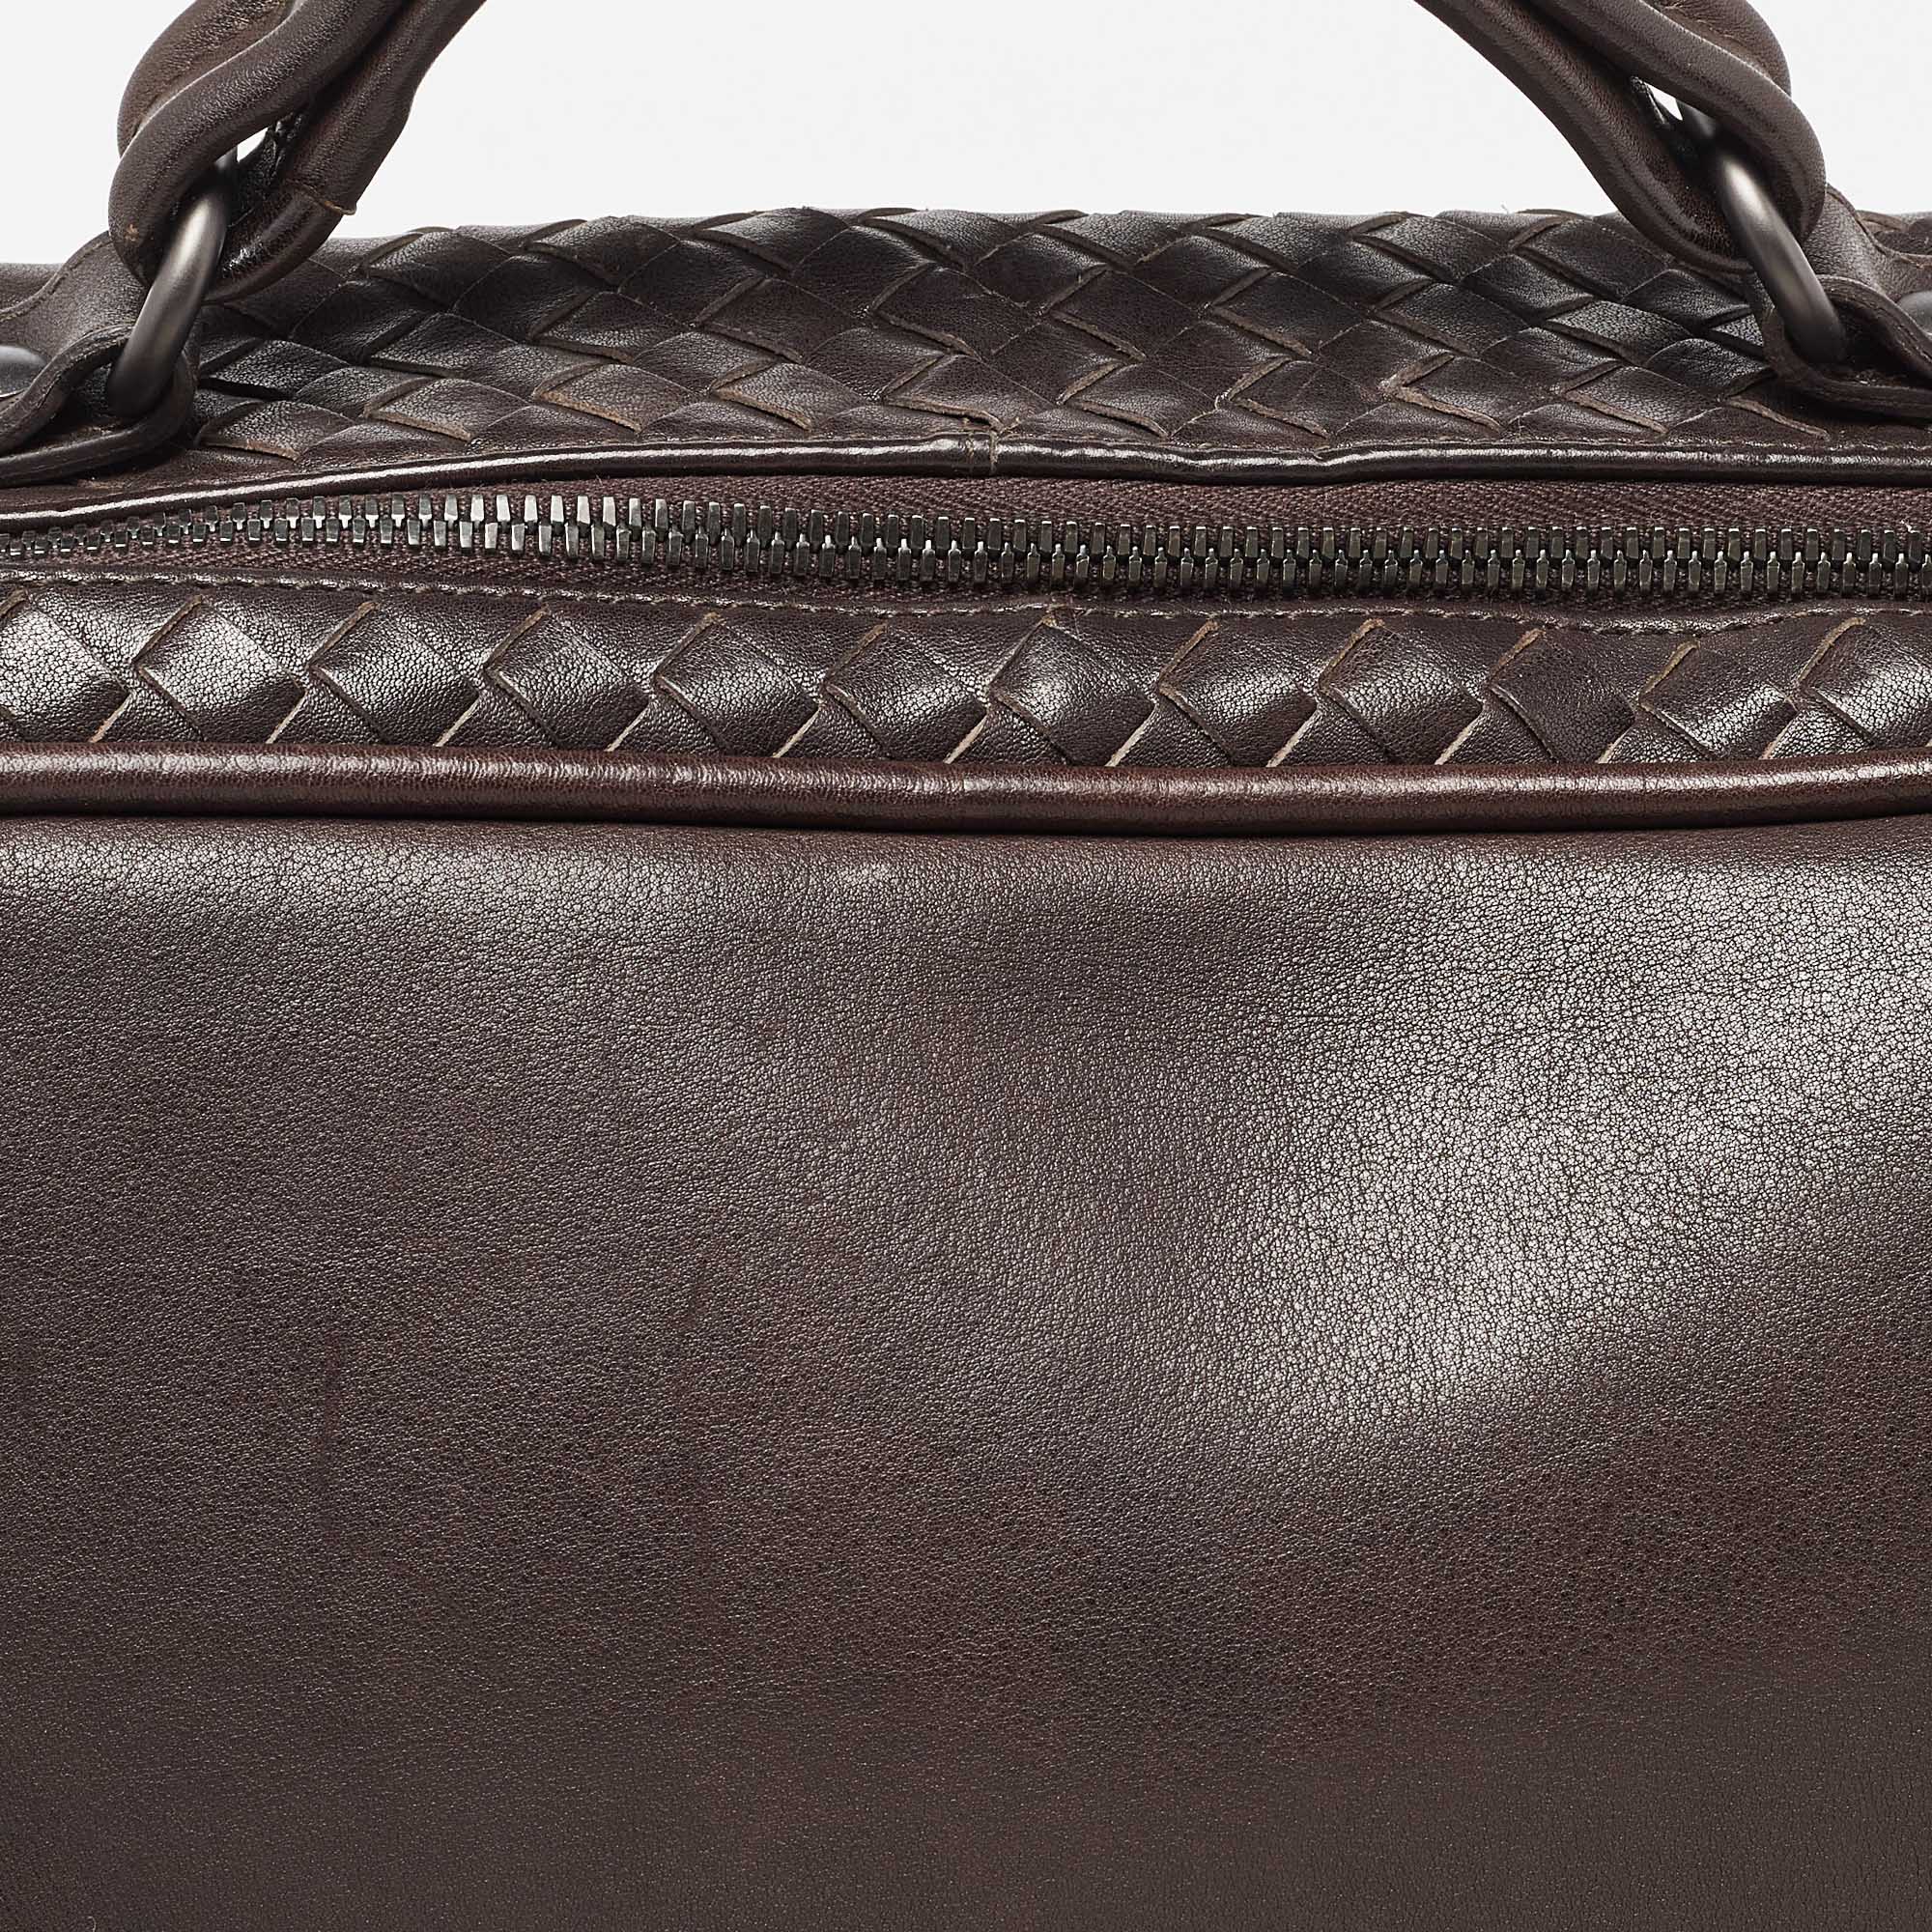 Bottega Veneta Brown Intrecciato Leather Briefcase